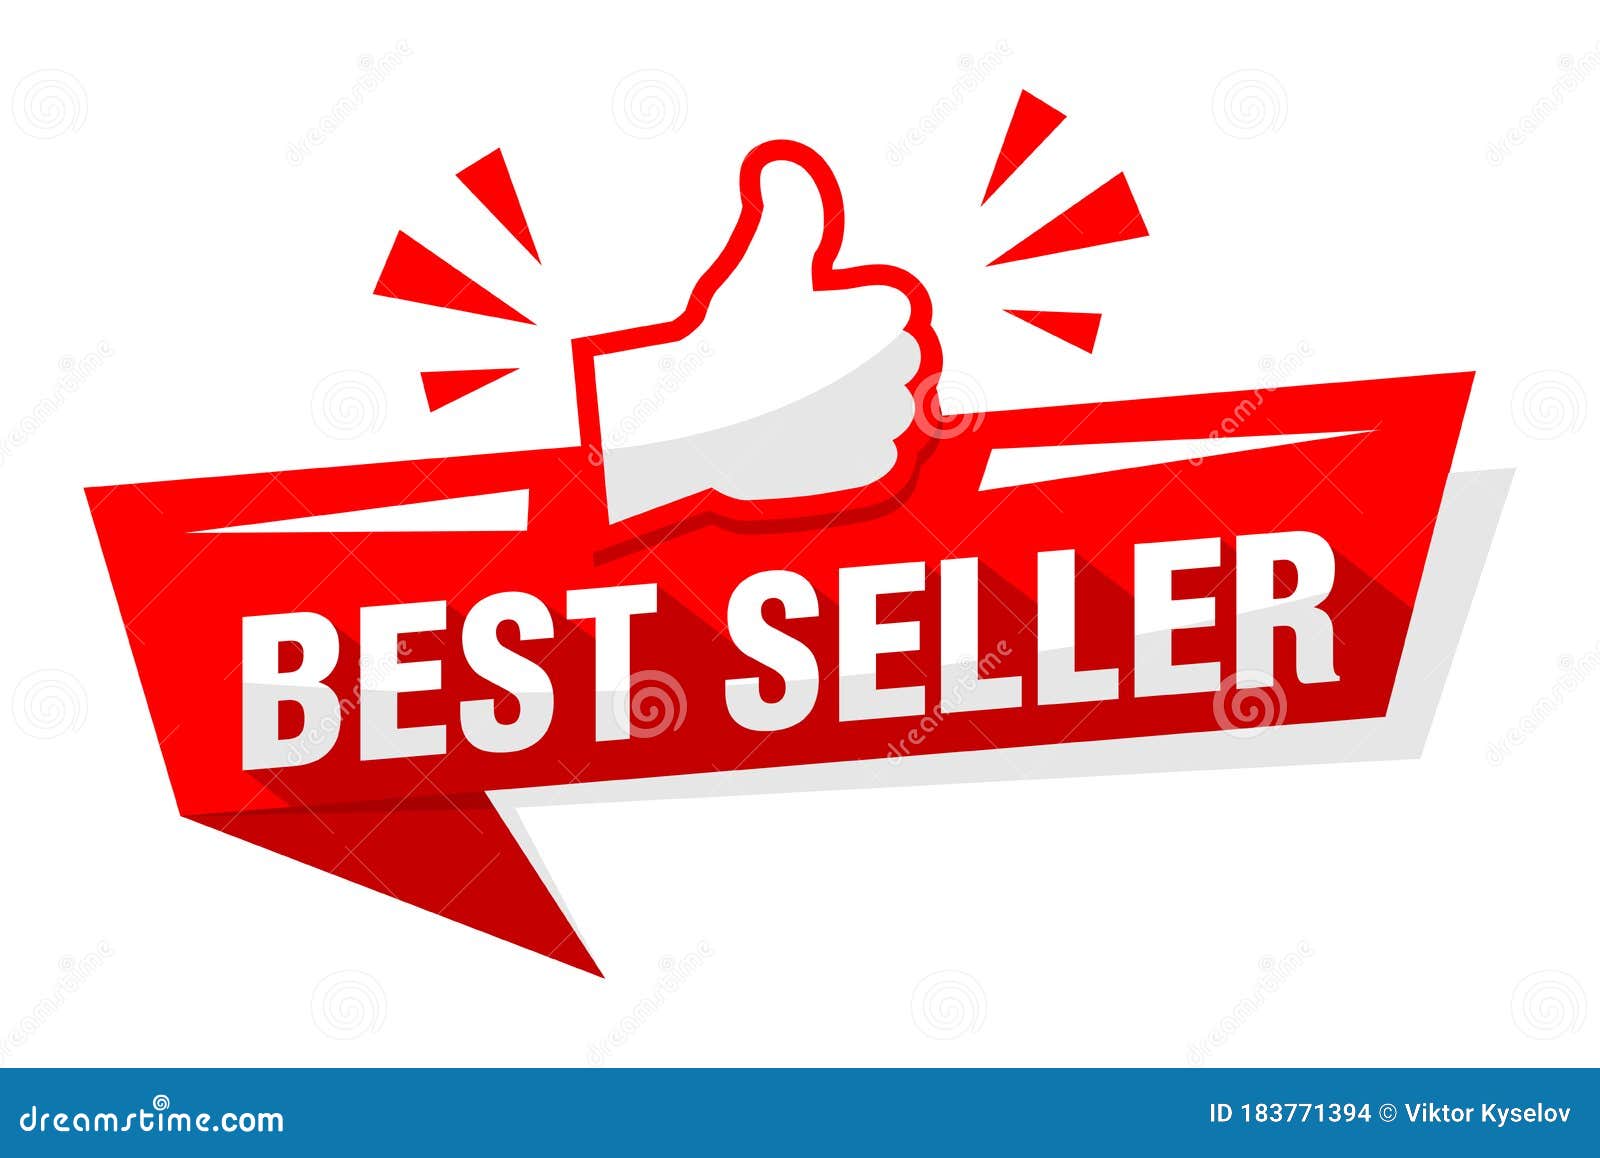 https://thumbs.dreamstime.com/z/advertising-sticker-best-seller-red-thumb-up-illustration-vector-best-seller-advertising-sticker-183771394.jpg